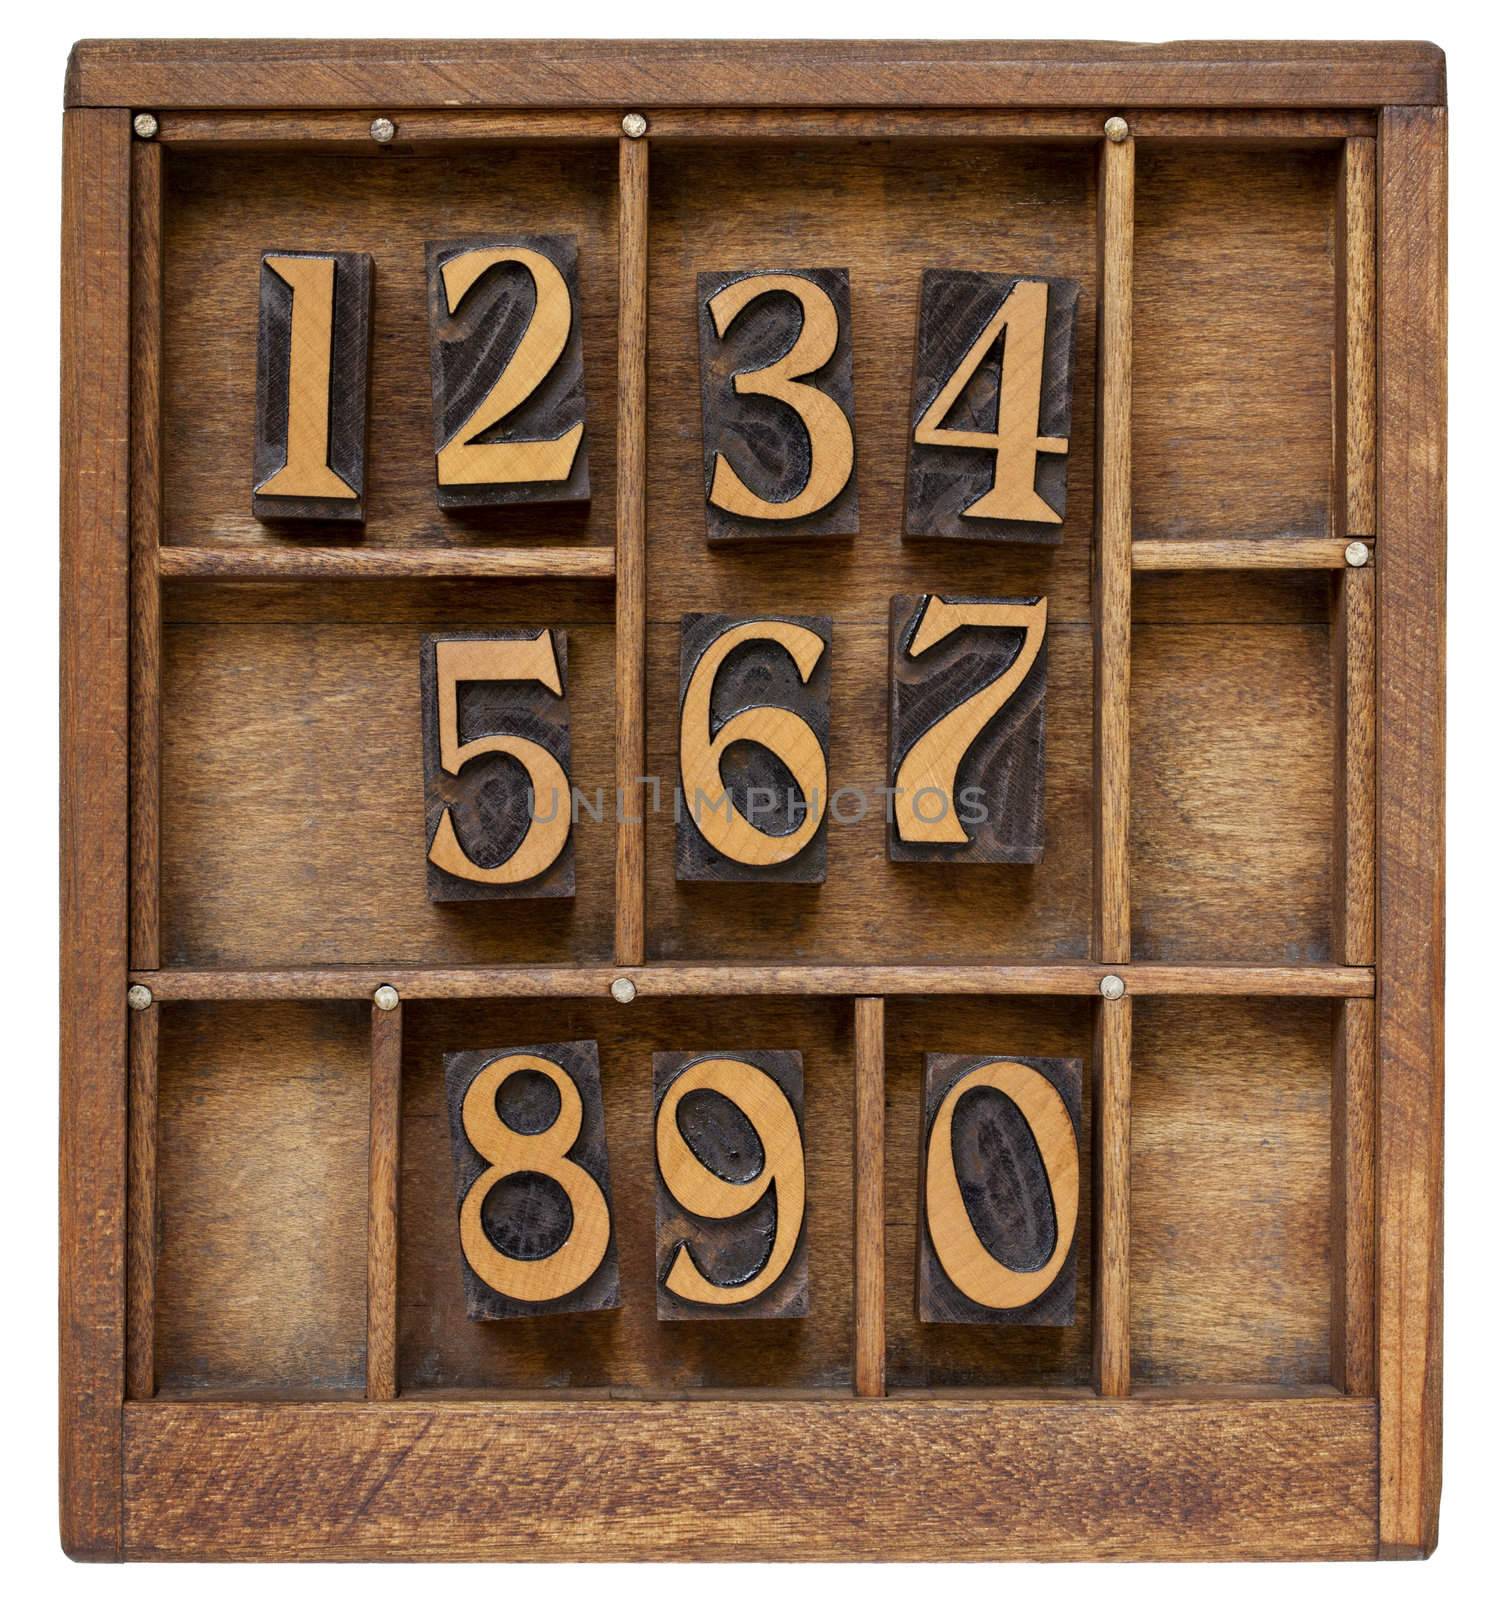 numbers in vintage letterpress type by PixelsAway